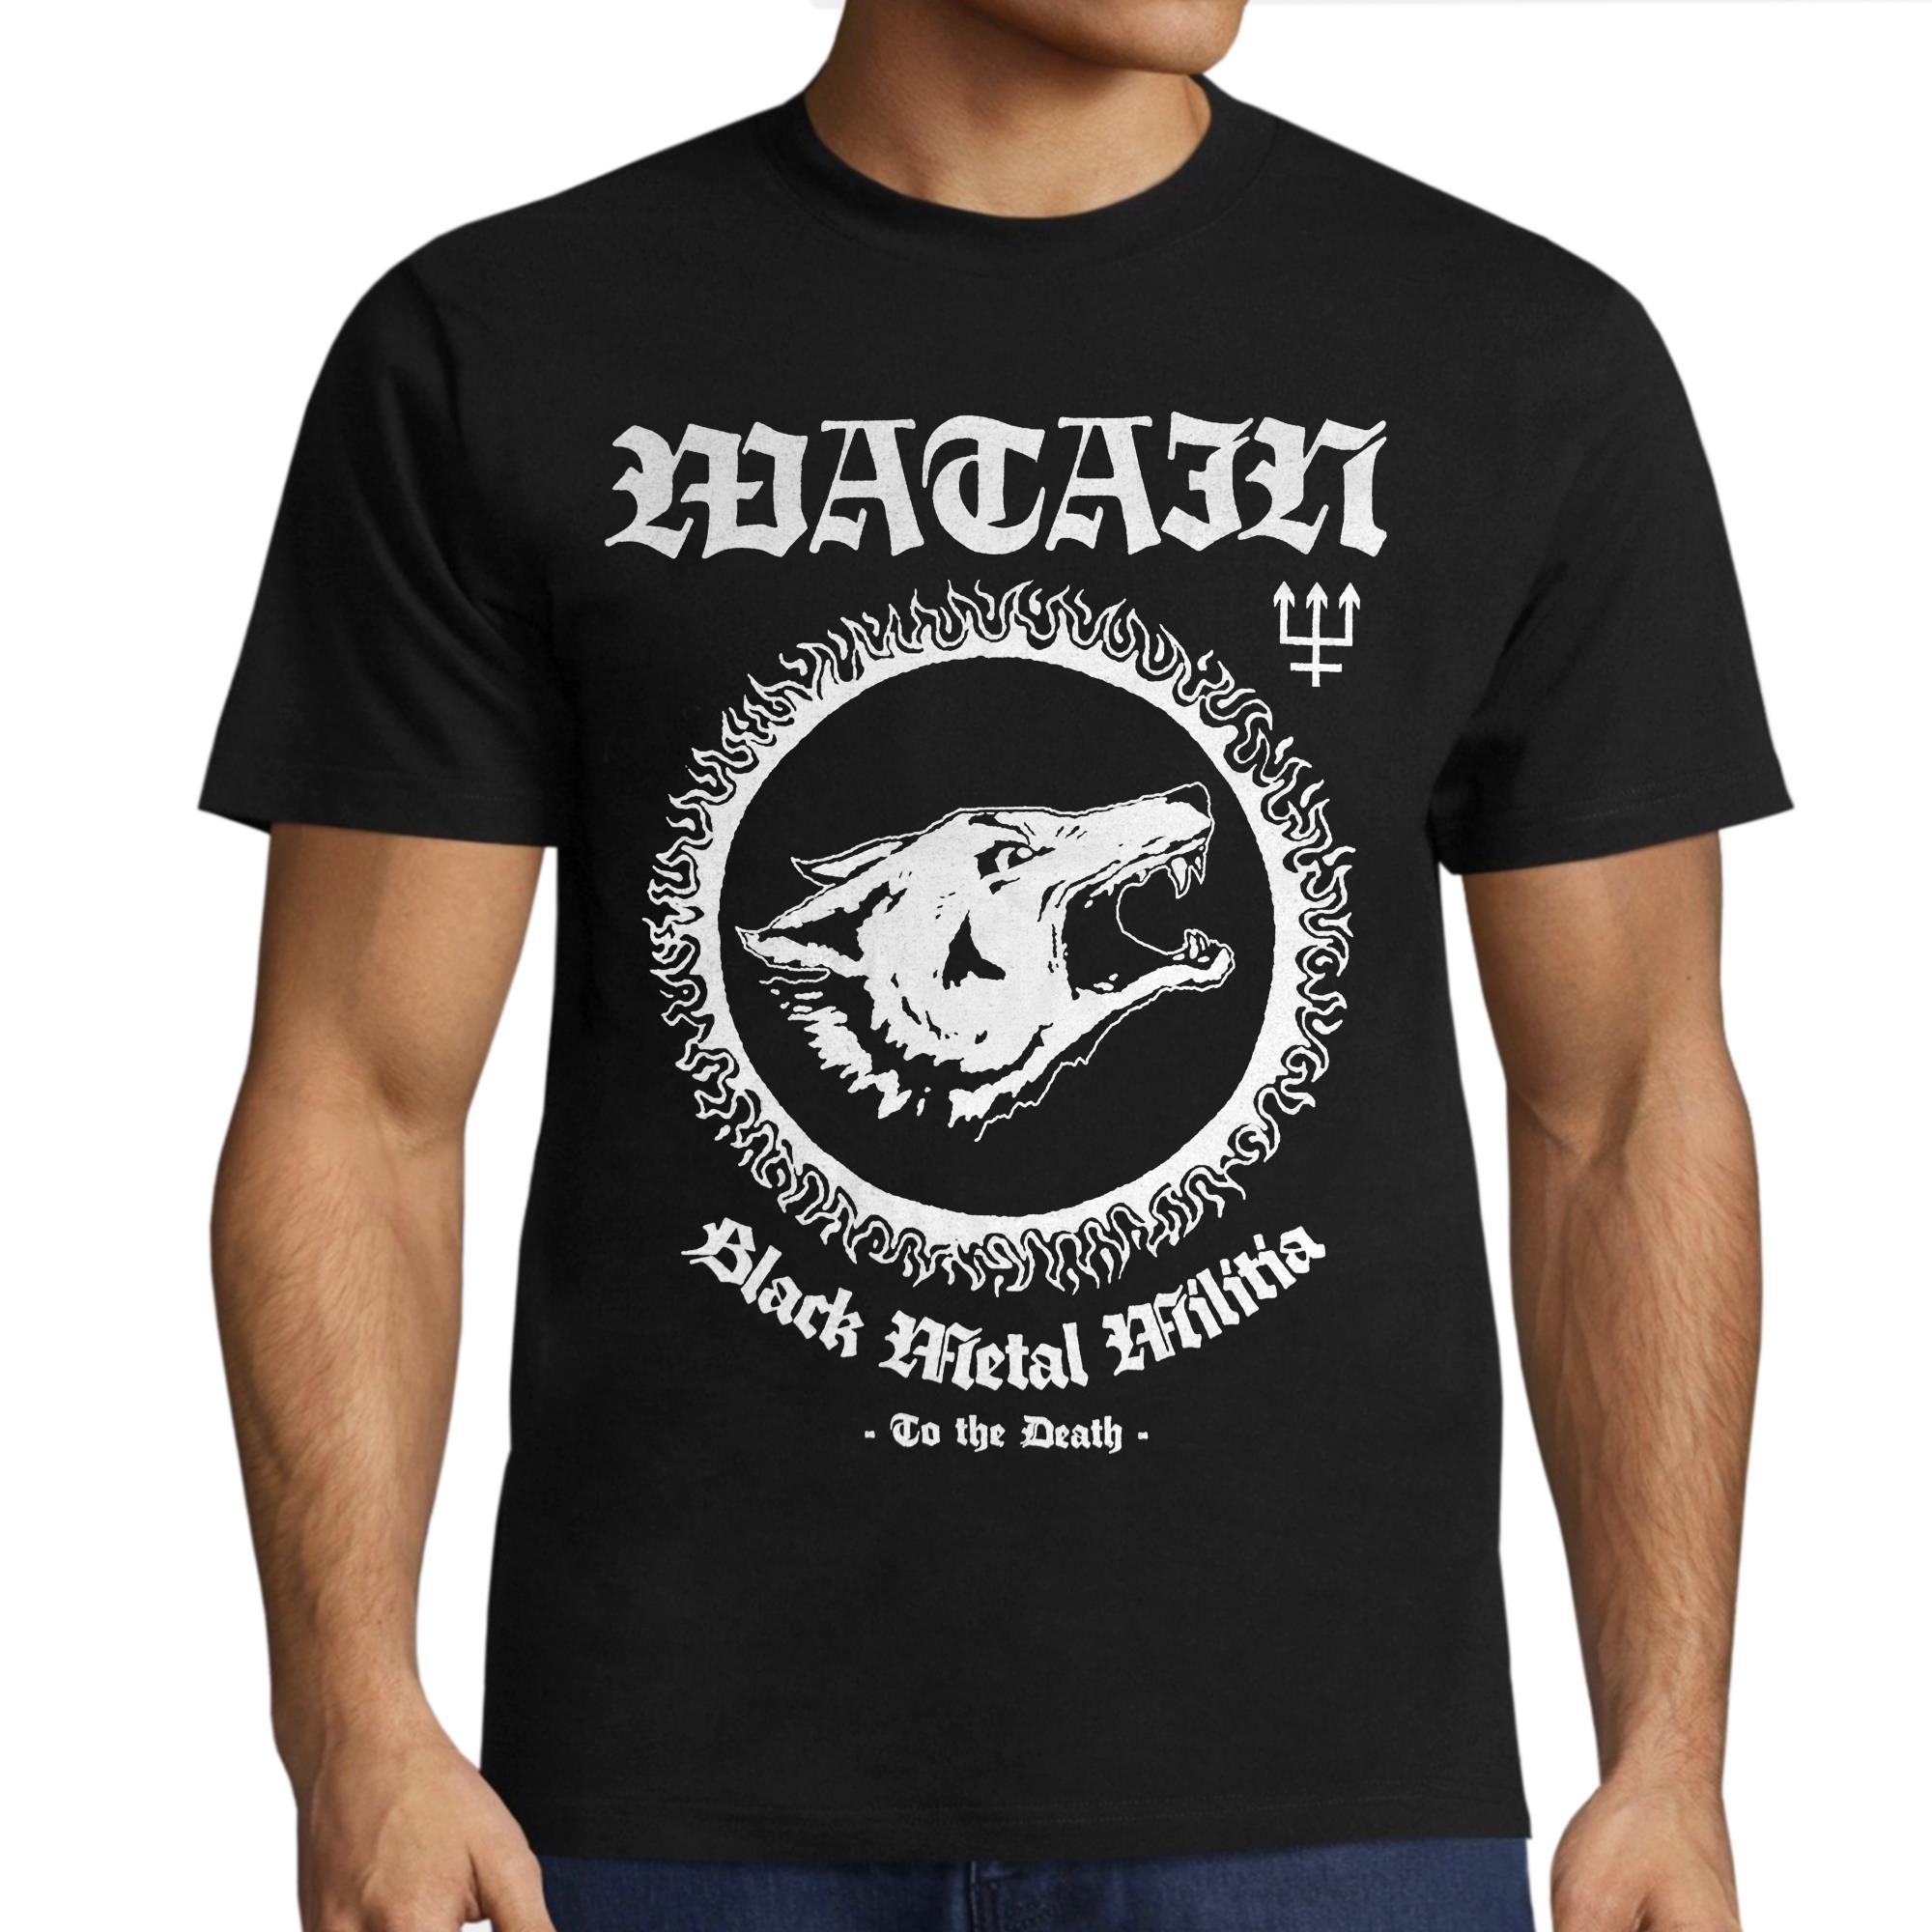 Black Metal Militia T-Shirt